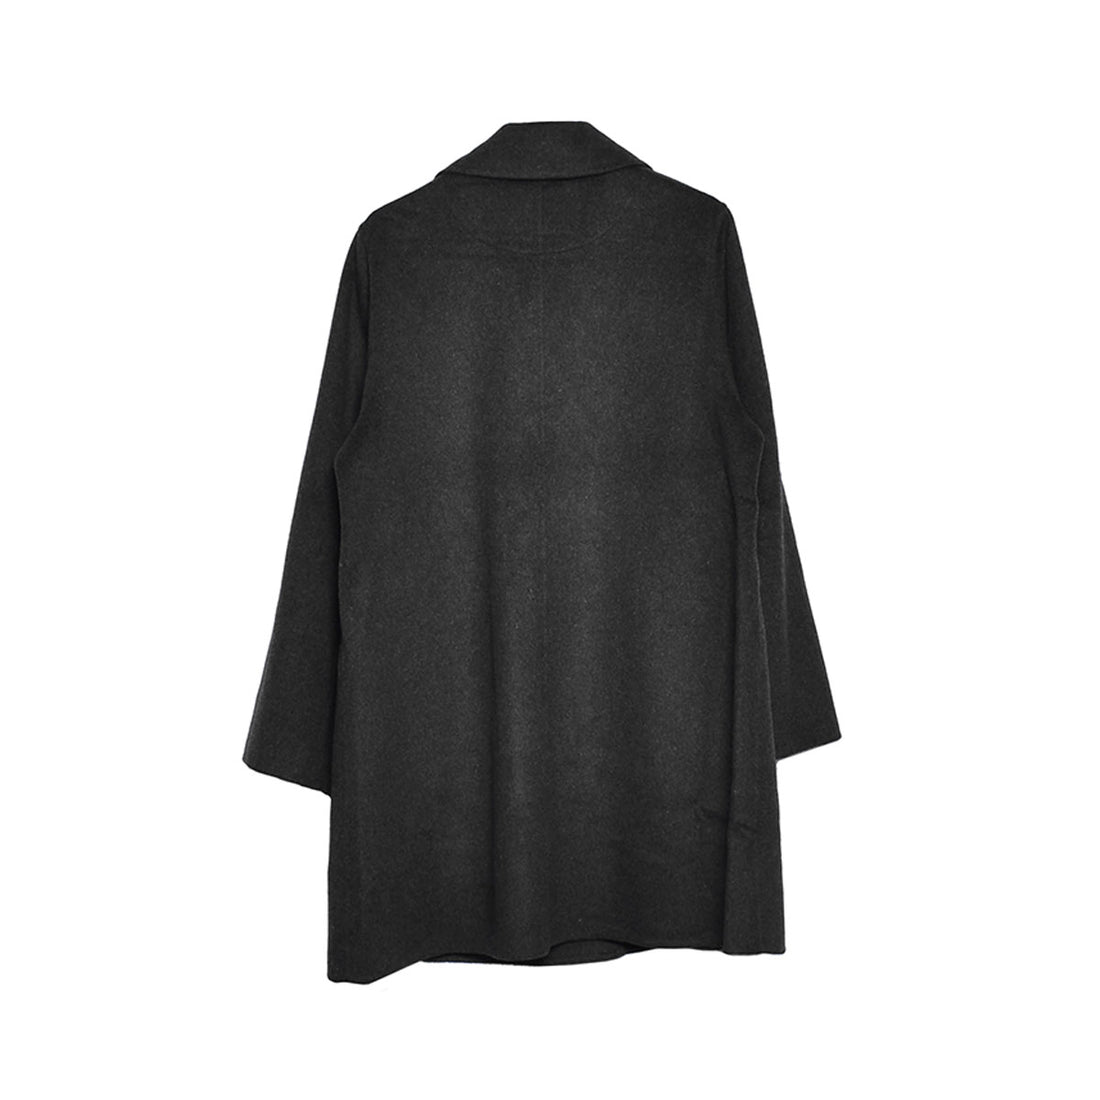 [GANNI]Wool Midi Jacket/BLACK(F8505)